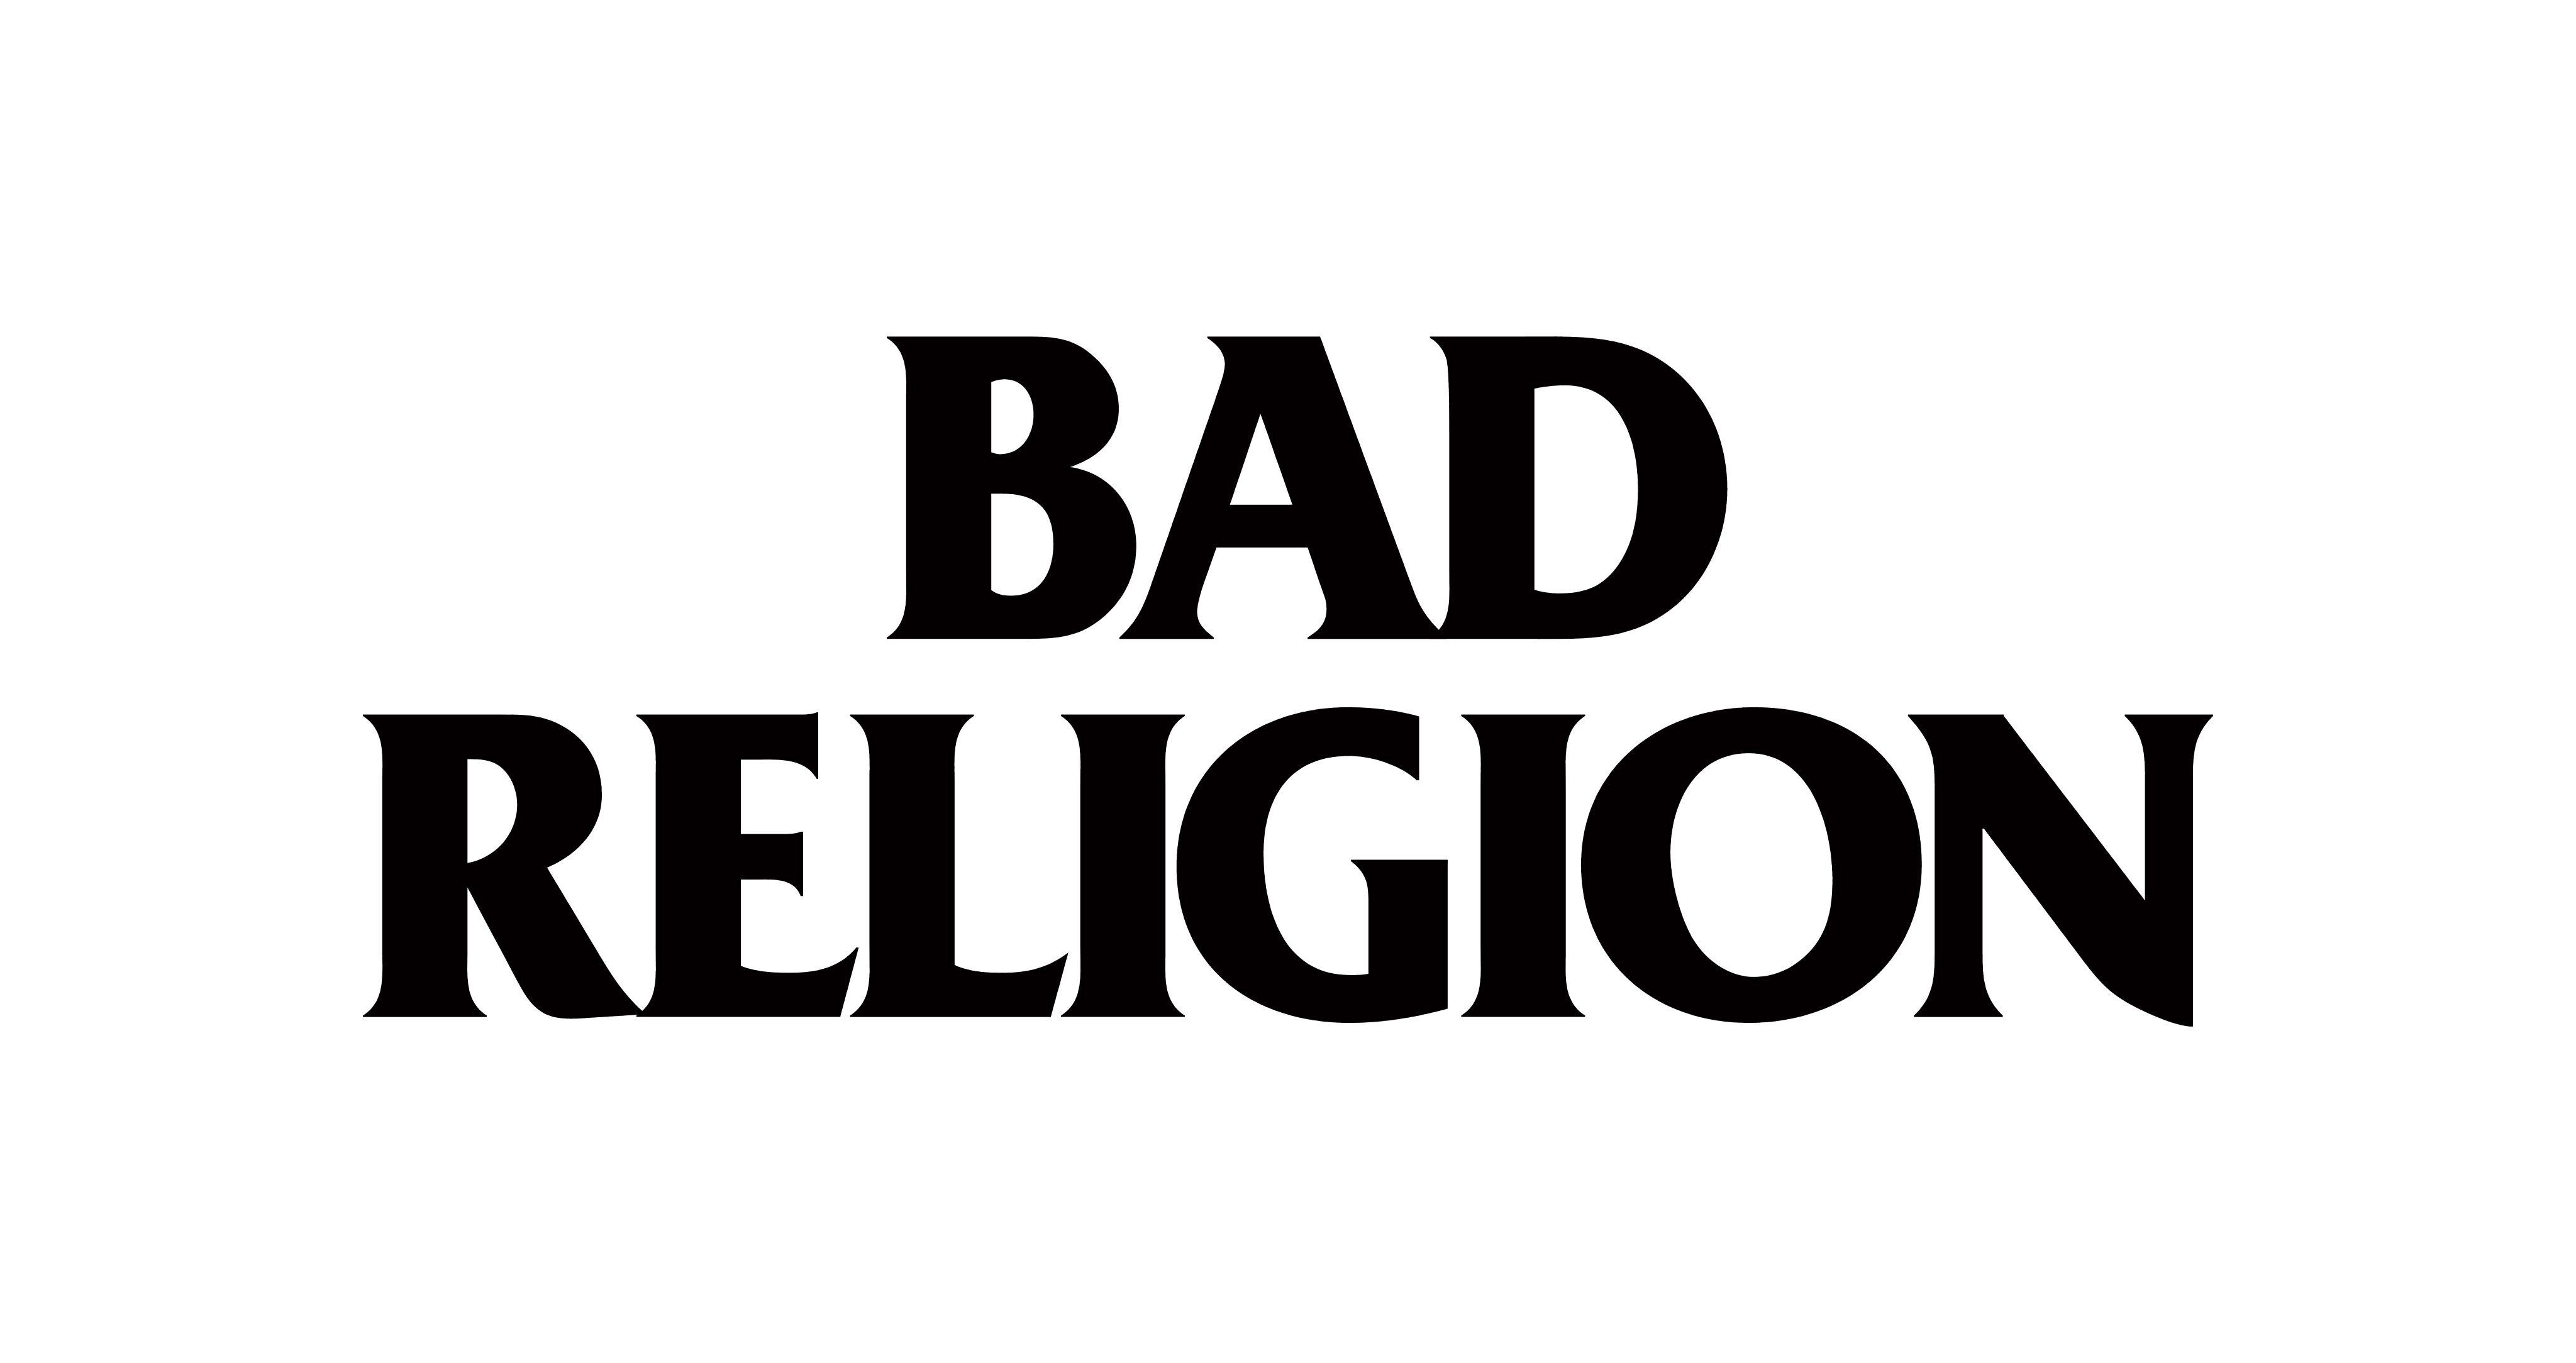 Religion Logo - Bad Religion